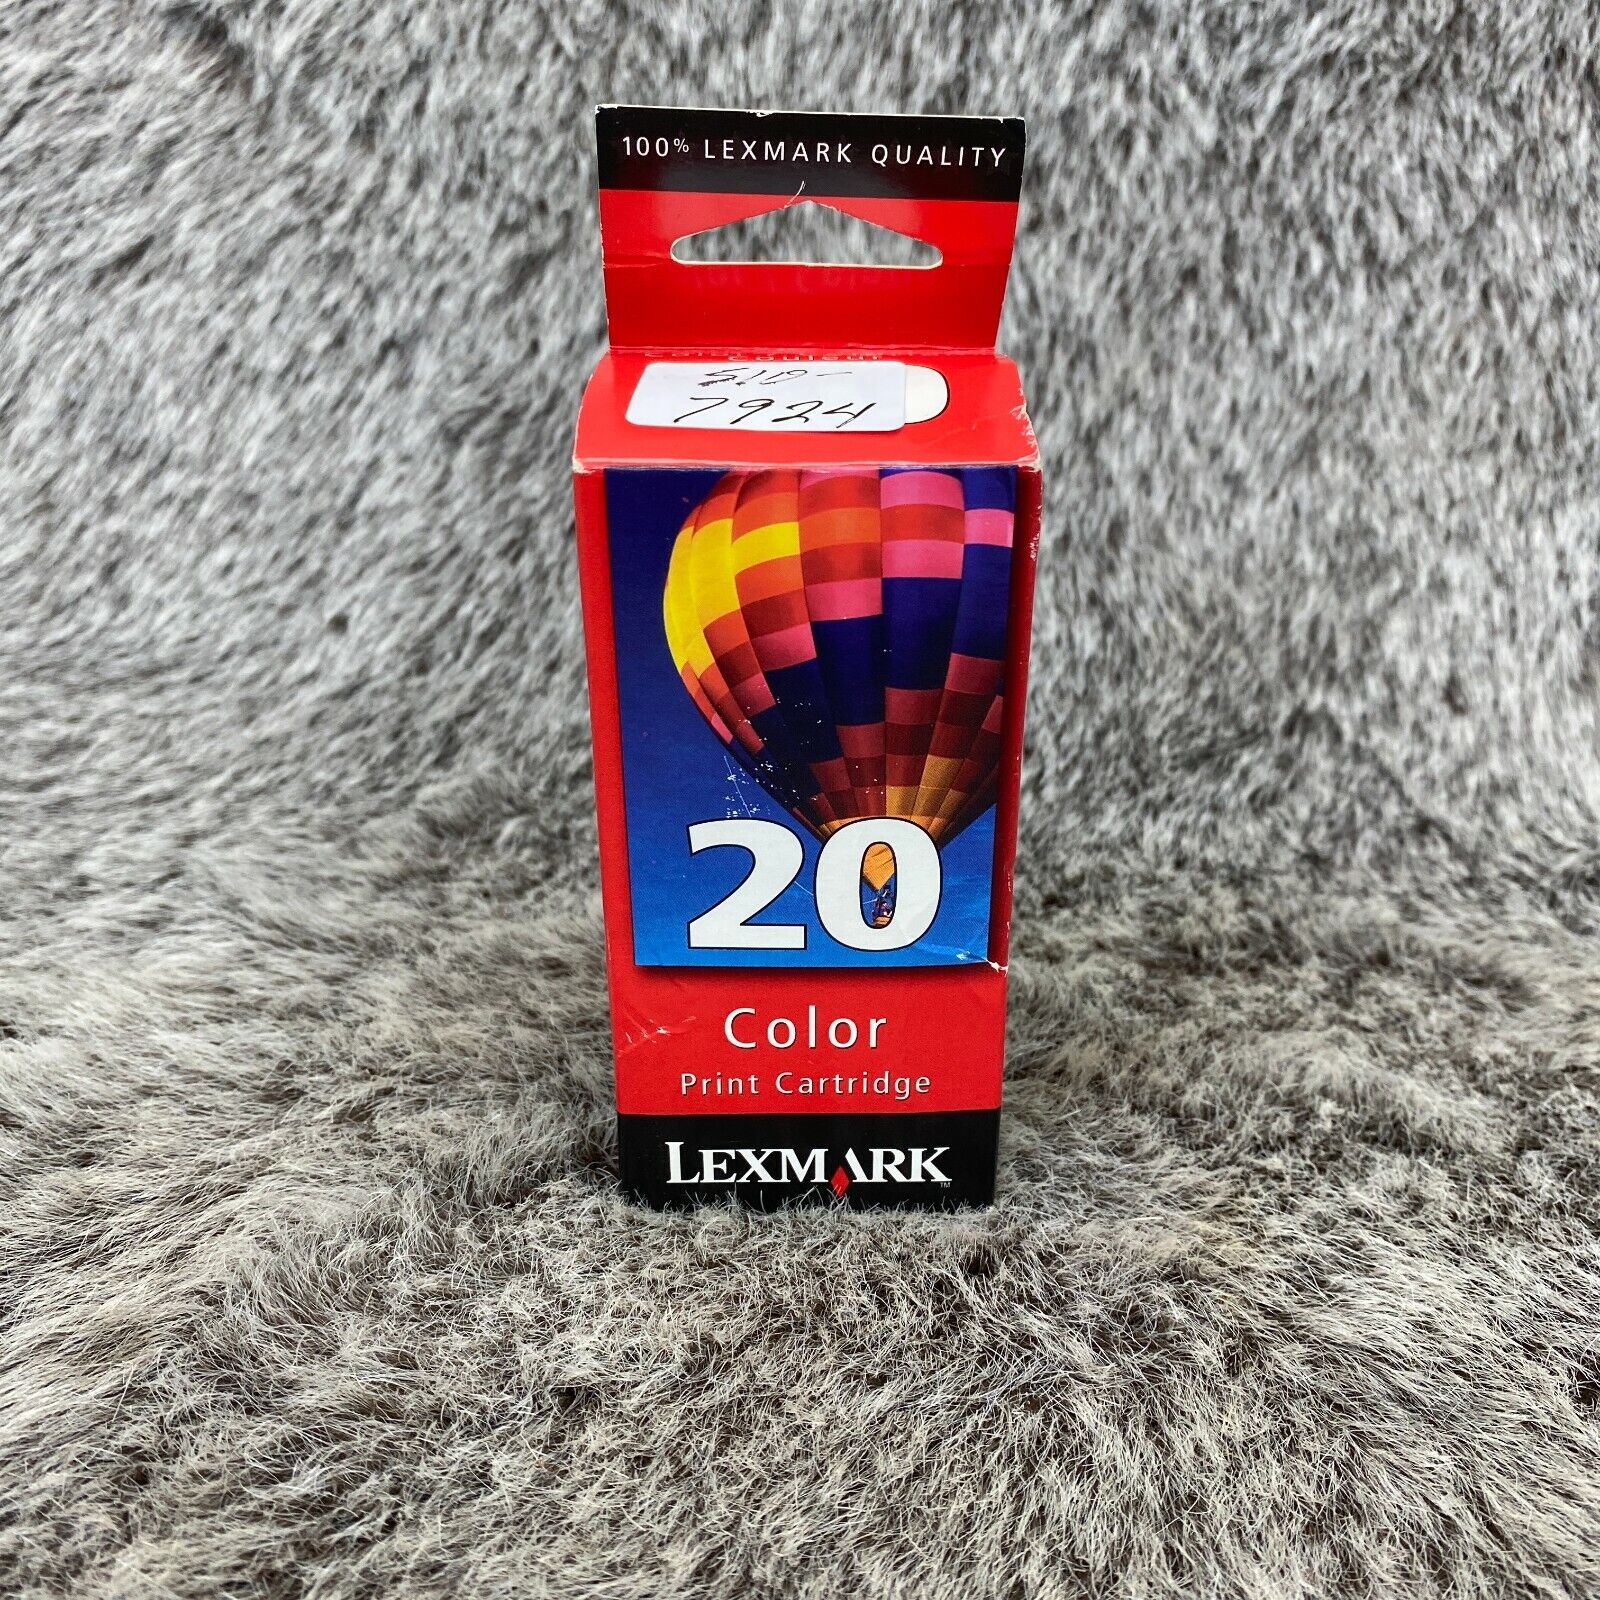 Lexmark 20 Color Print Cartridge New